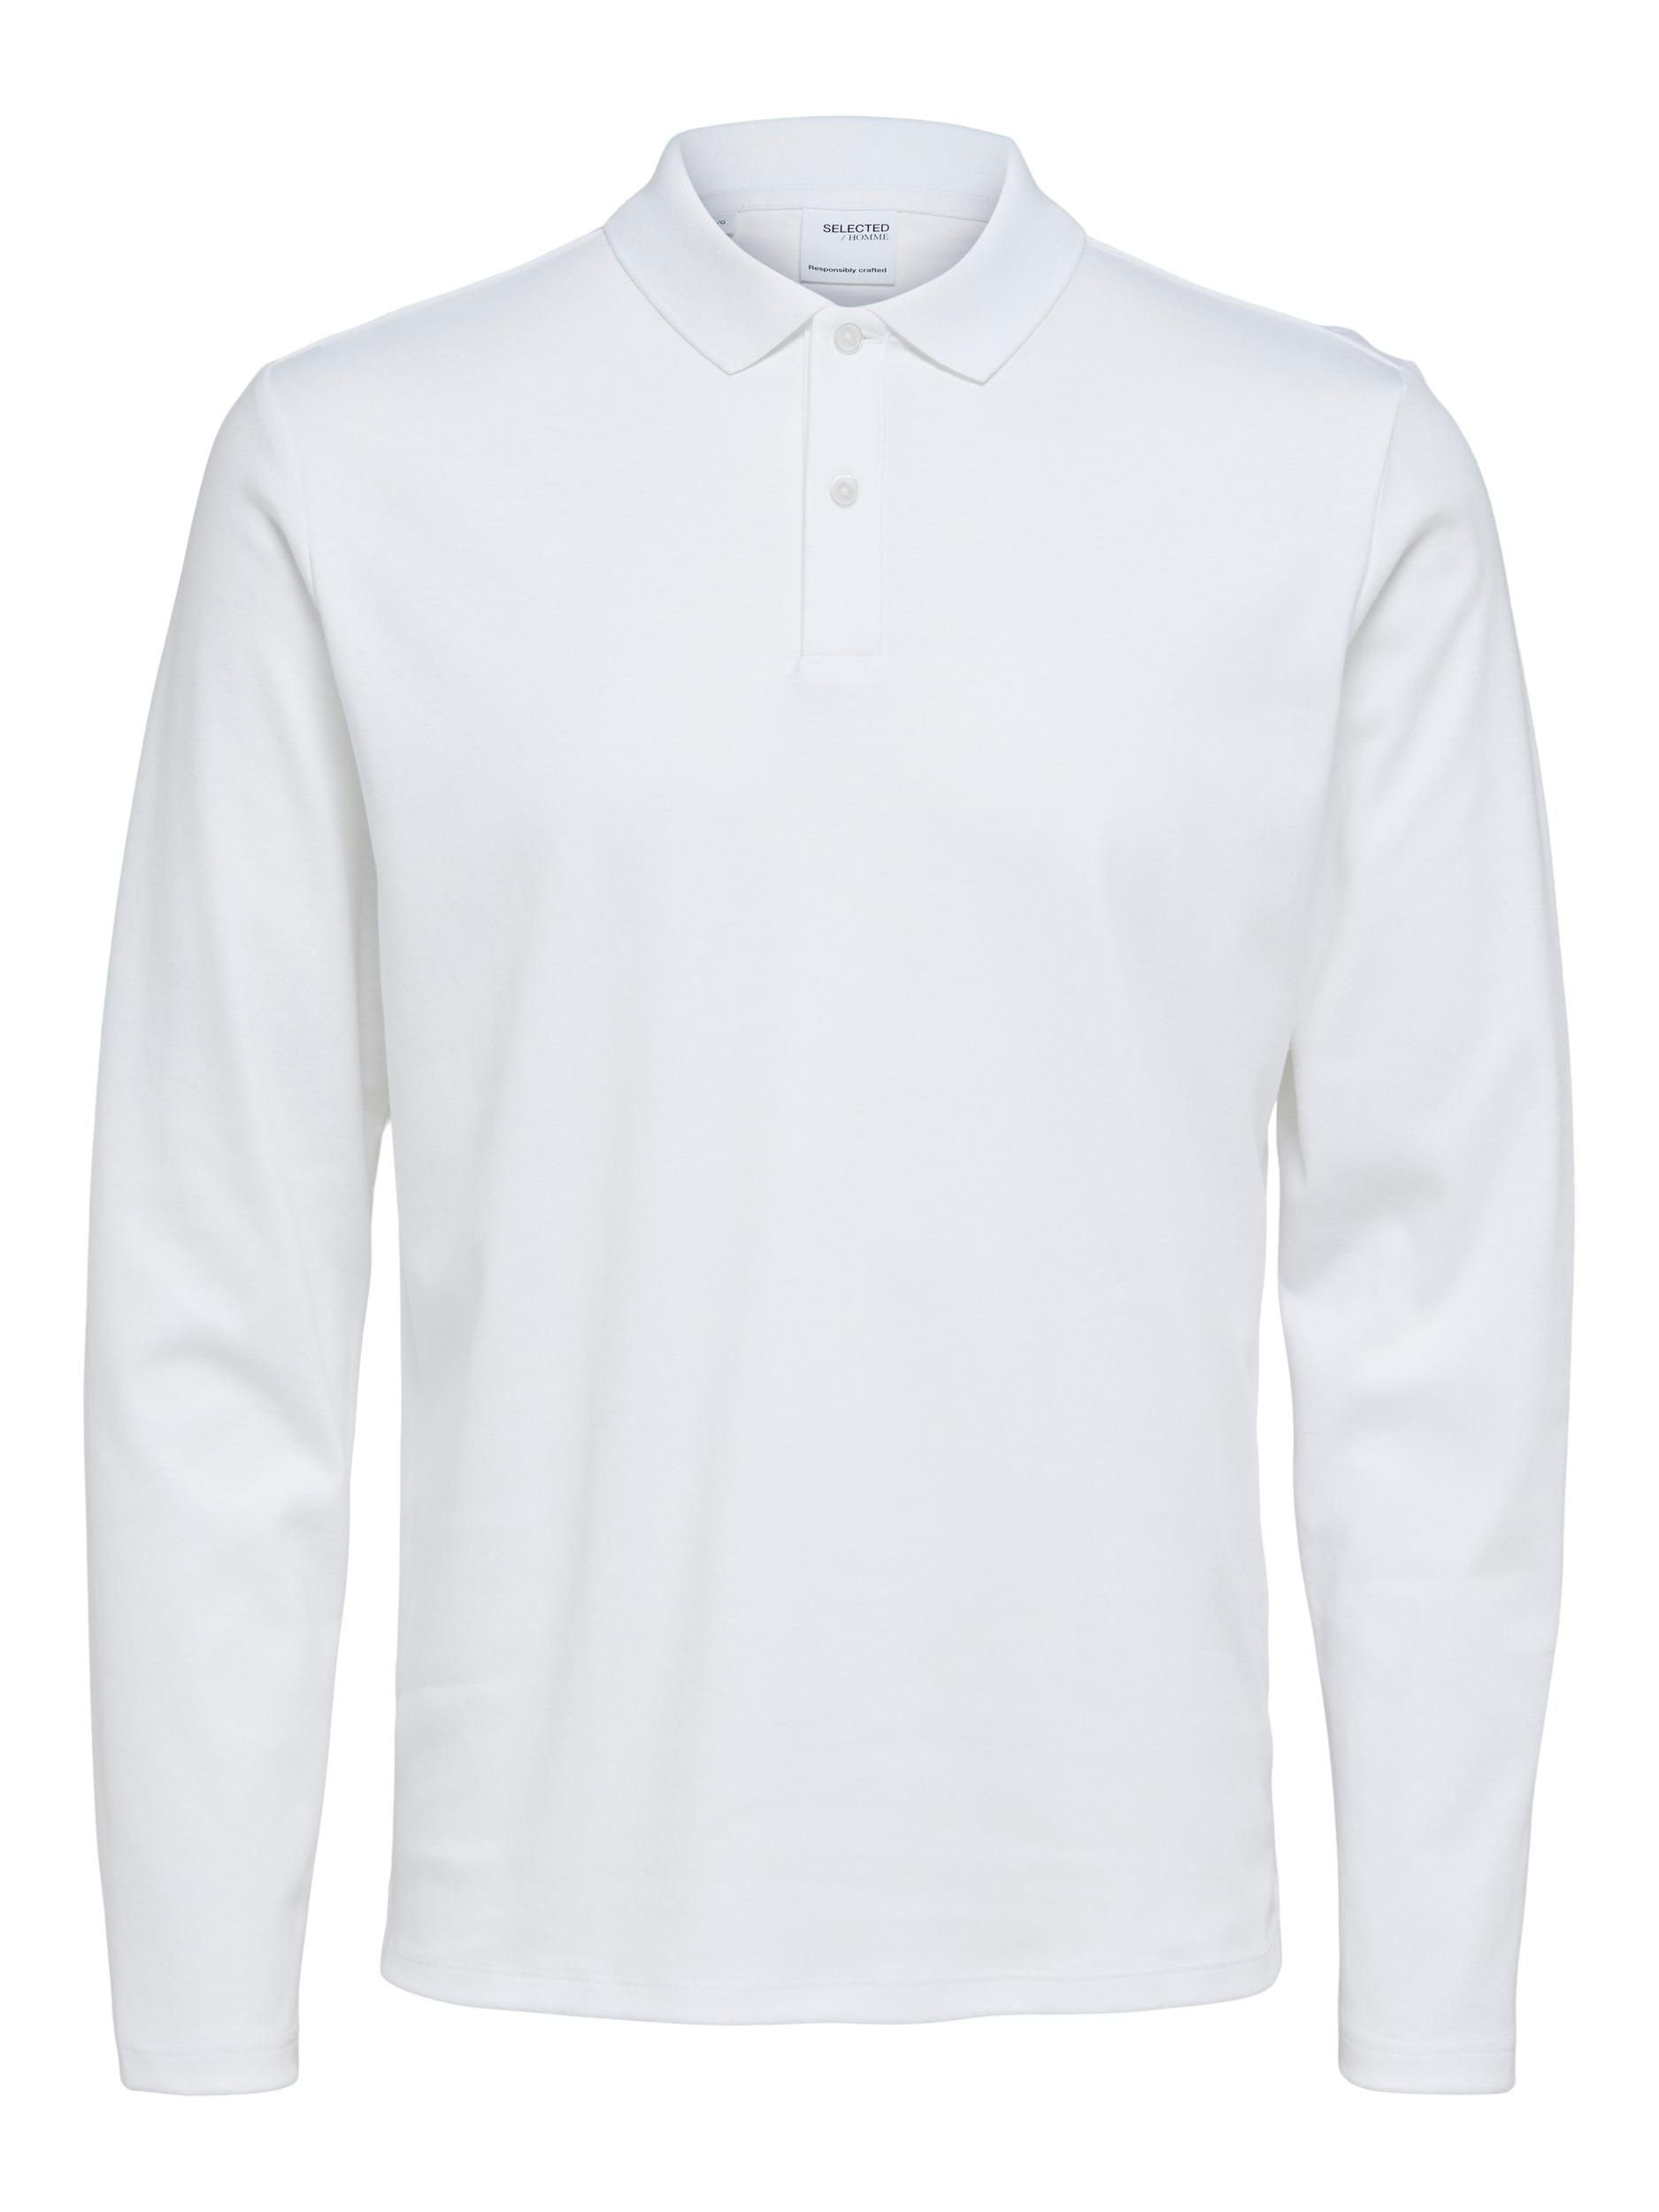 SELECTED HOMME Langarm-Poloshirt bright white